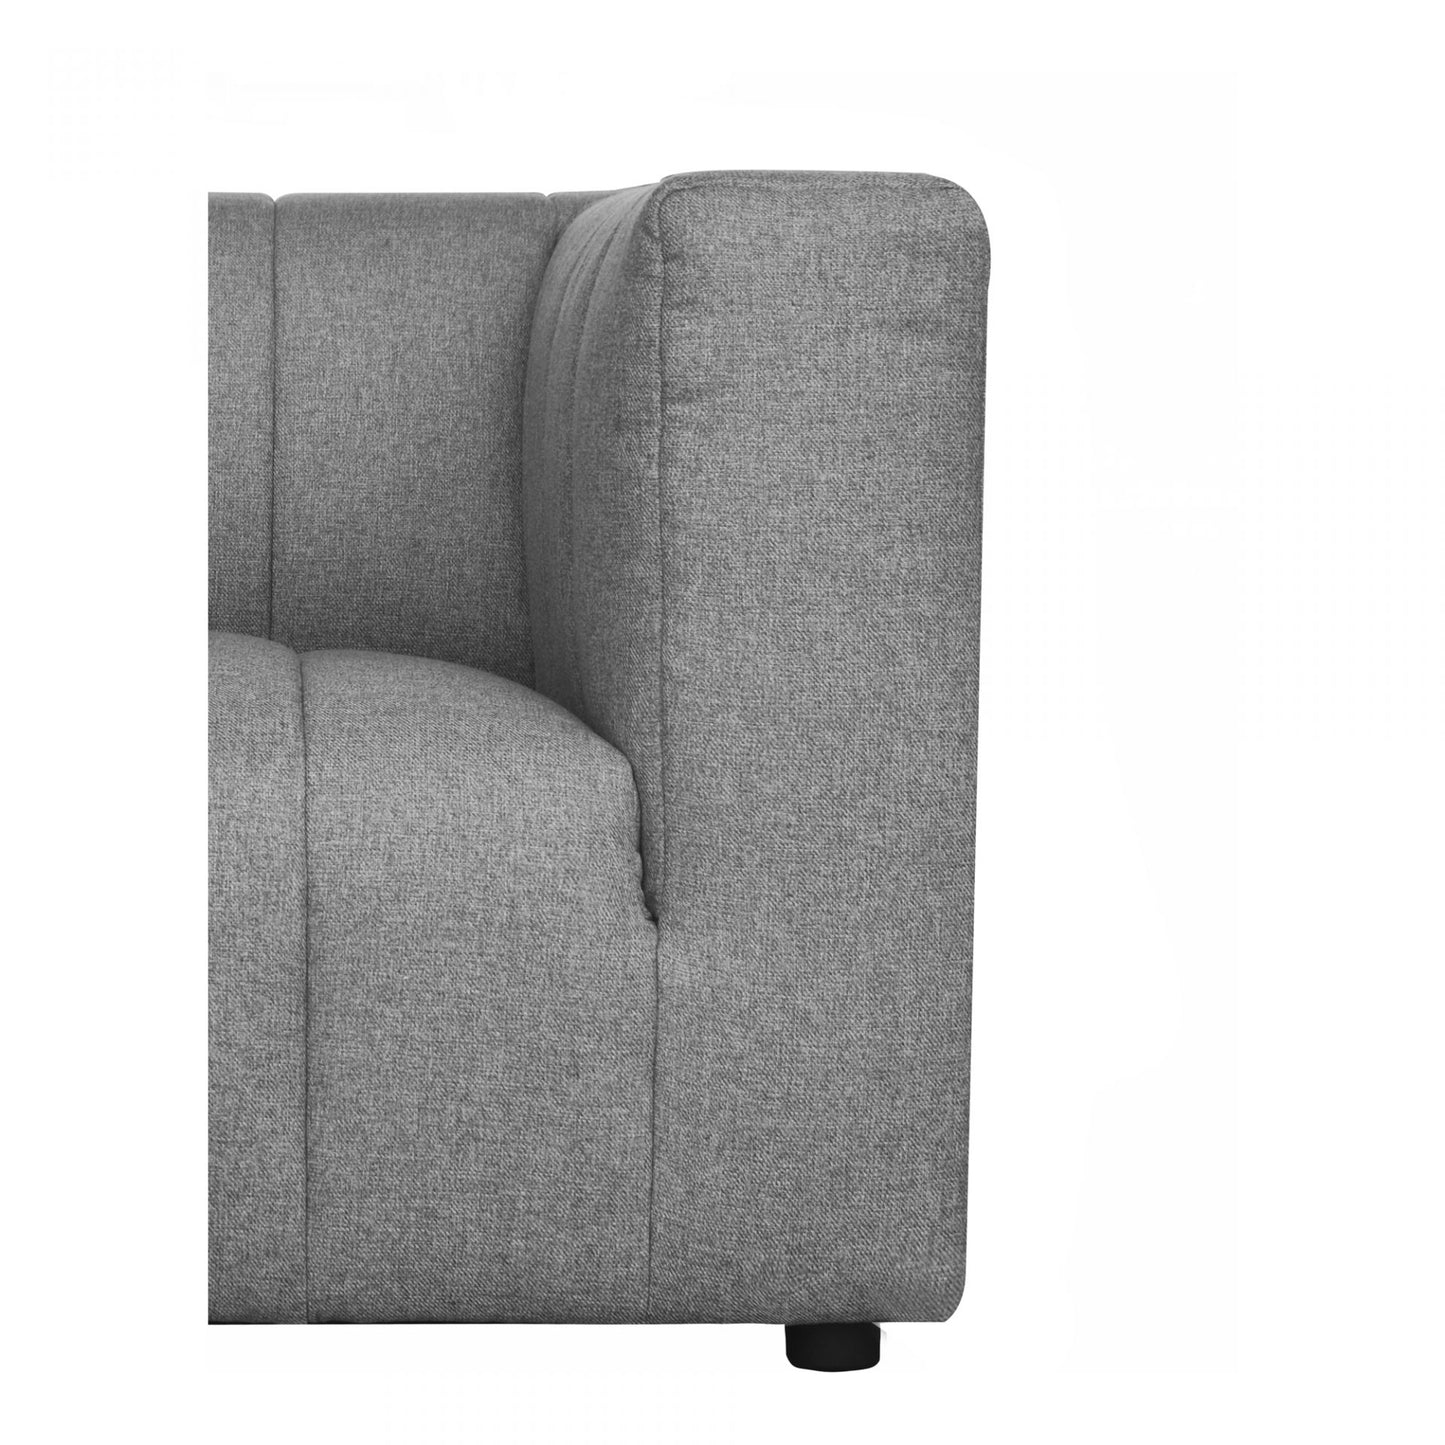 Lyric Grey Arm Chair, Right MT-1023-15